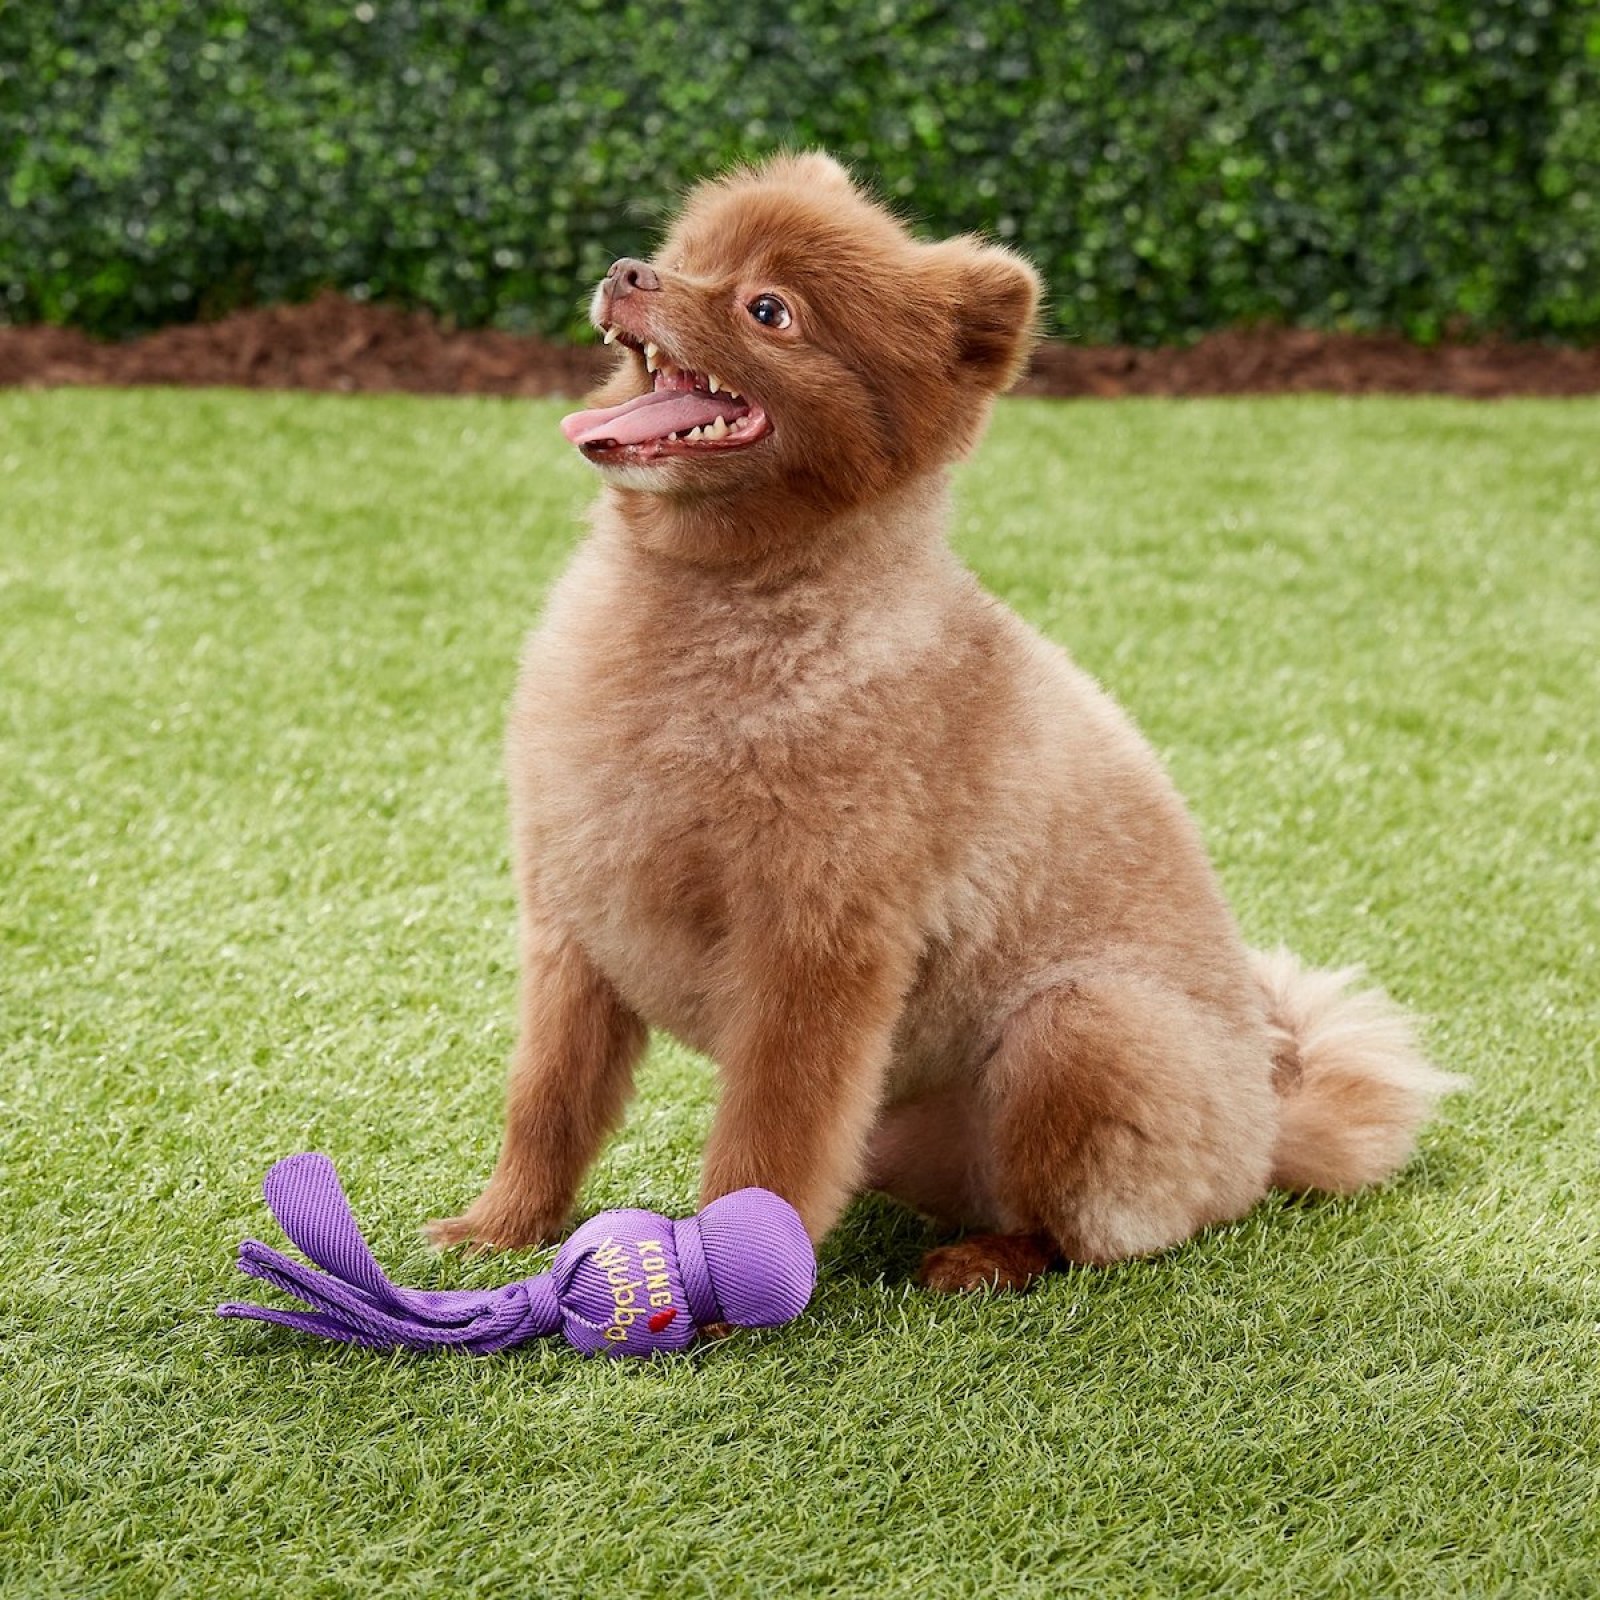 https://d.newsweek.com/en/full/1861607/best-dog-toys-small-breeds-0.jpg?w=1600&h=1600&q=88&f=5fd4ac36443ae89876a5bdf86247a840